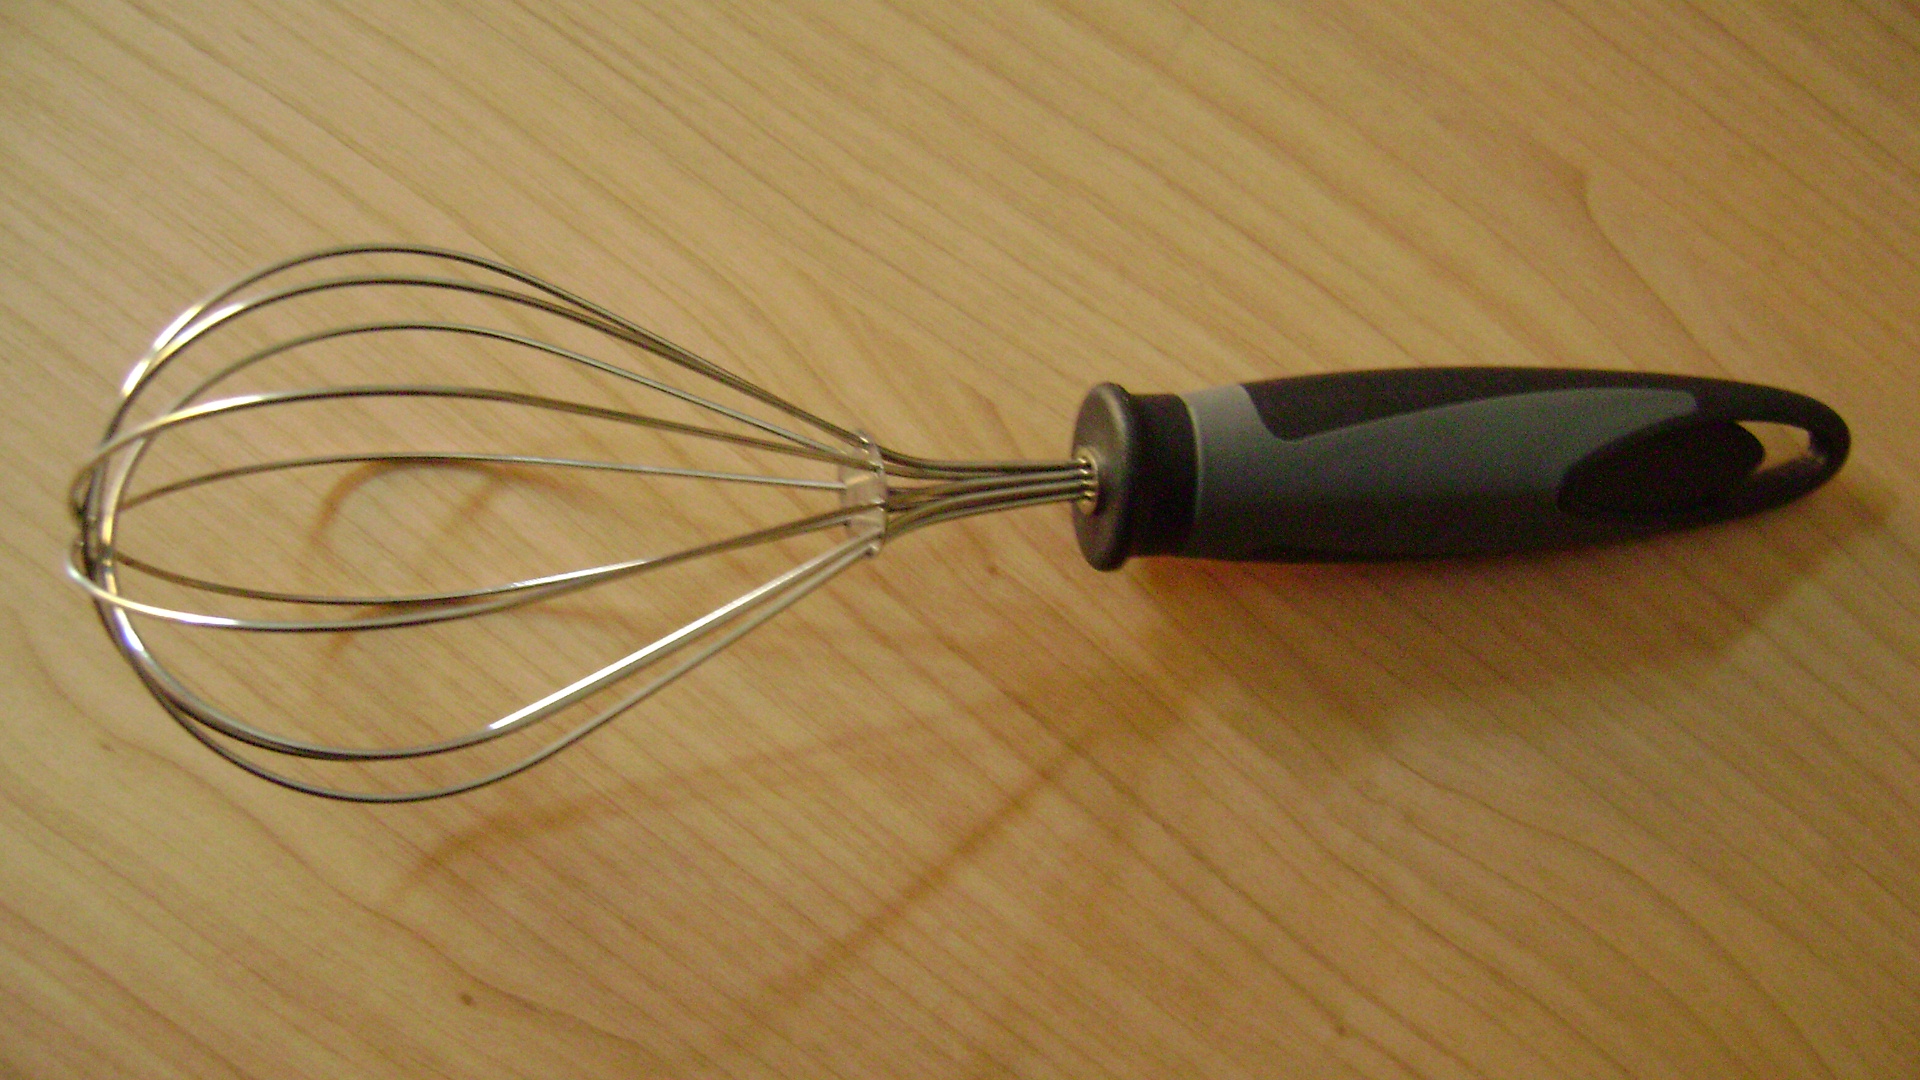 File:Frusta da cucina.jpg - Wikimedia Commons